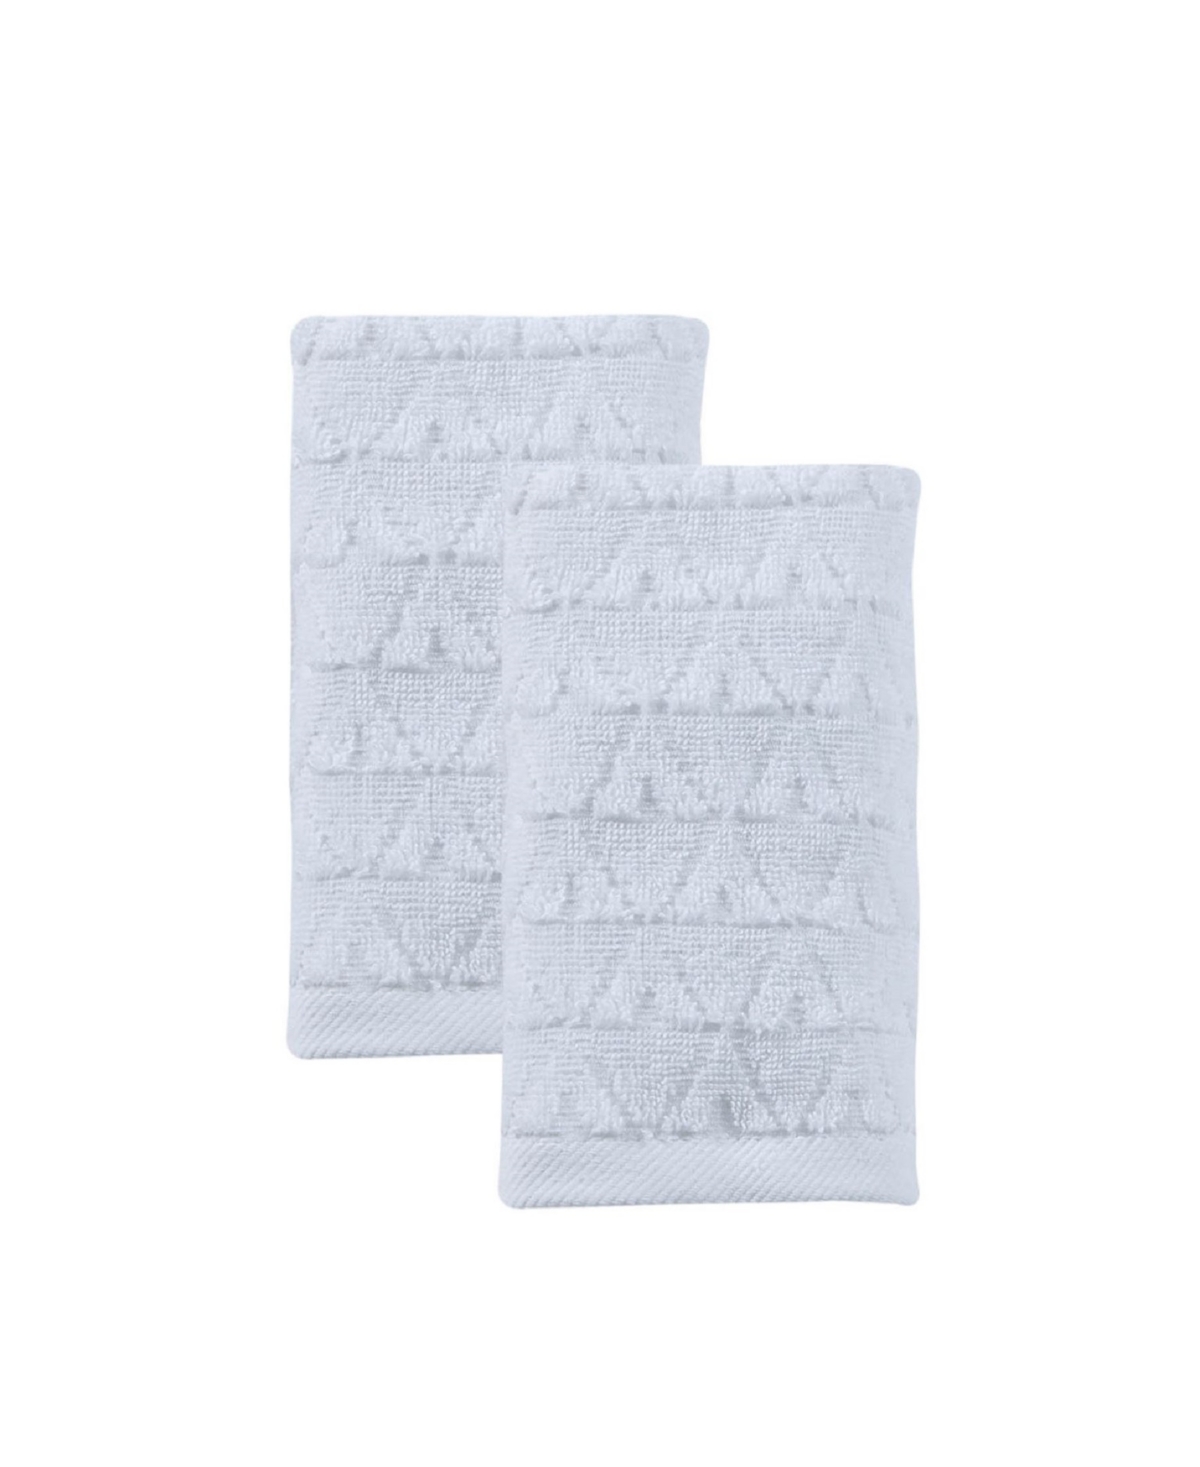 Ozan Premium Home Azure Collection 2 Piece Turkish Cotton Luxury Hand Towel Set Bedding In White